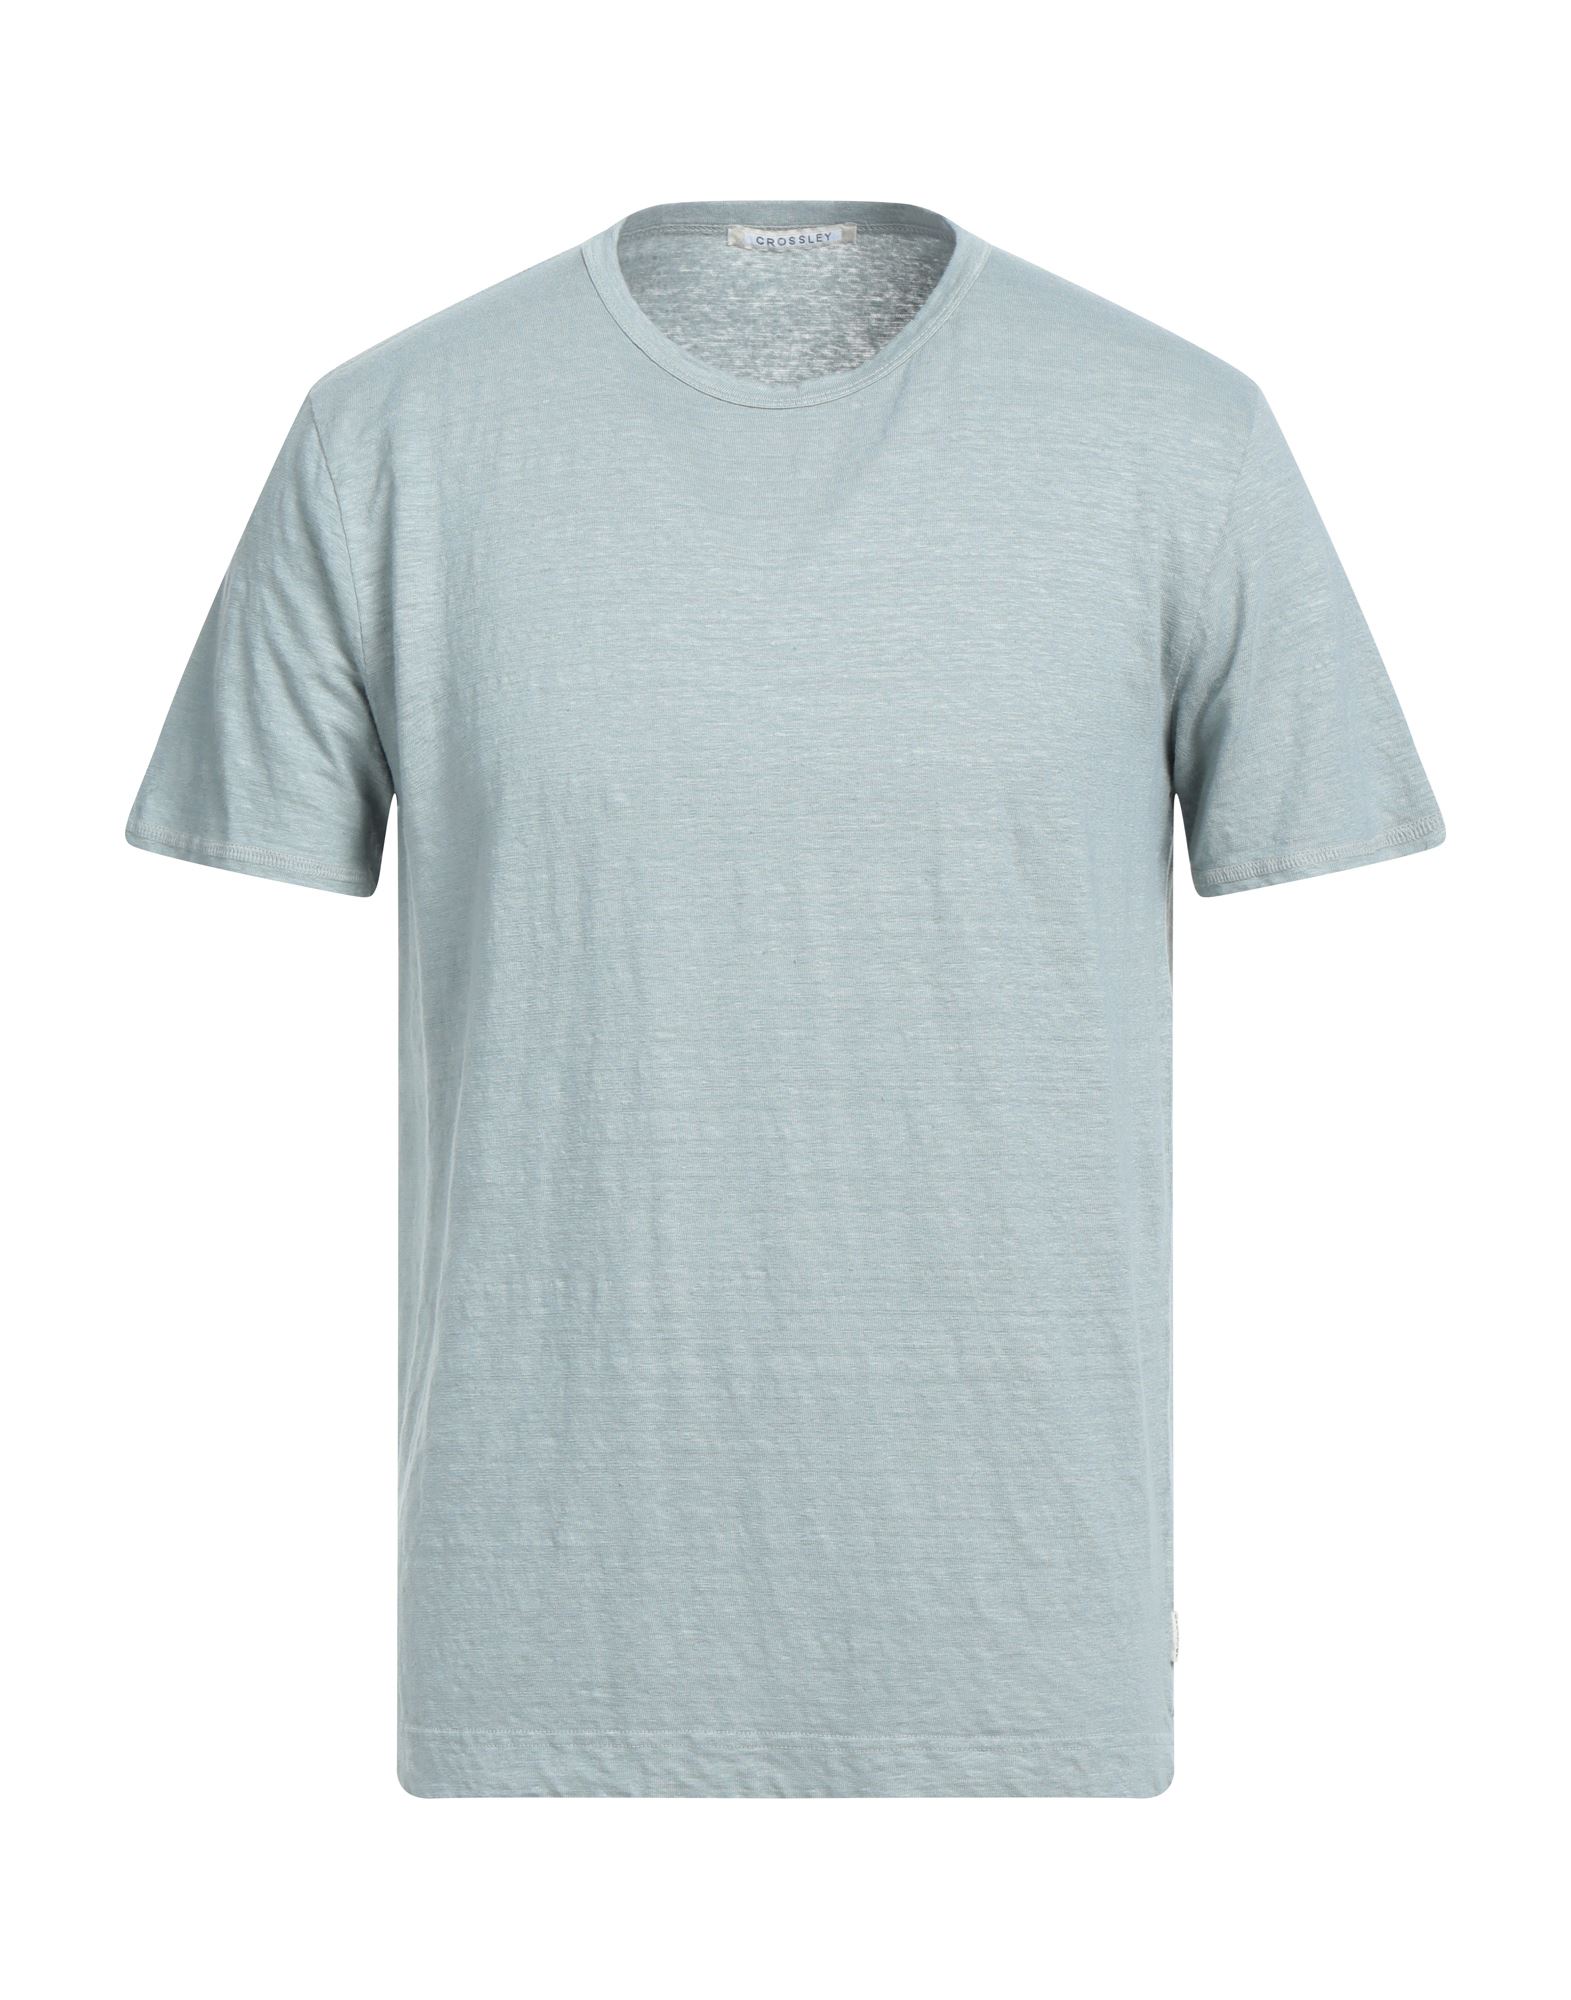 Crossley T-shirts In Grey